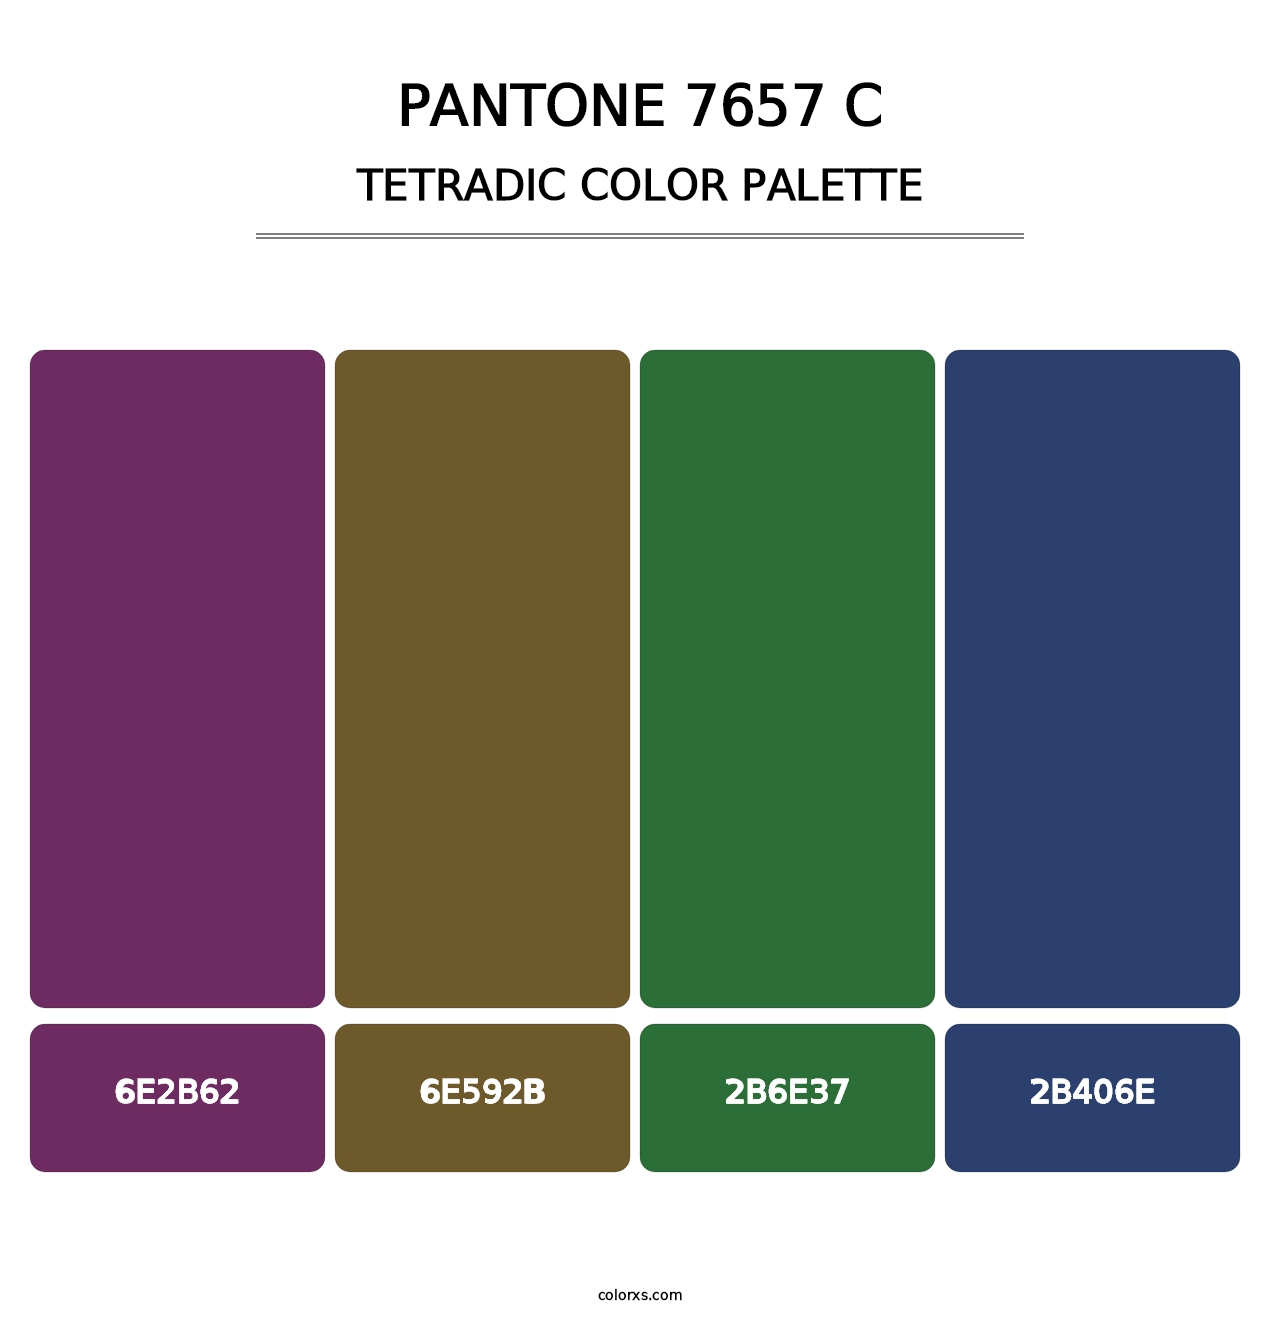 PANTONE 7657 C - Tetradic Color Palette